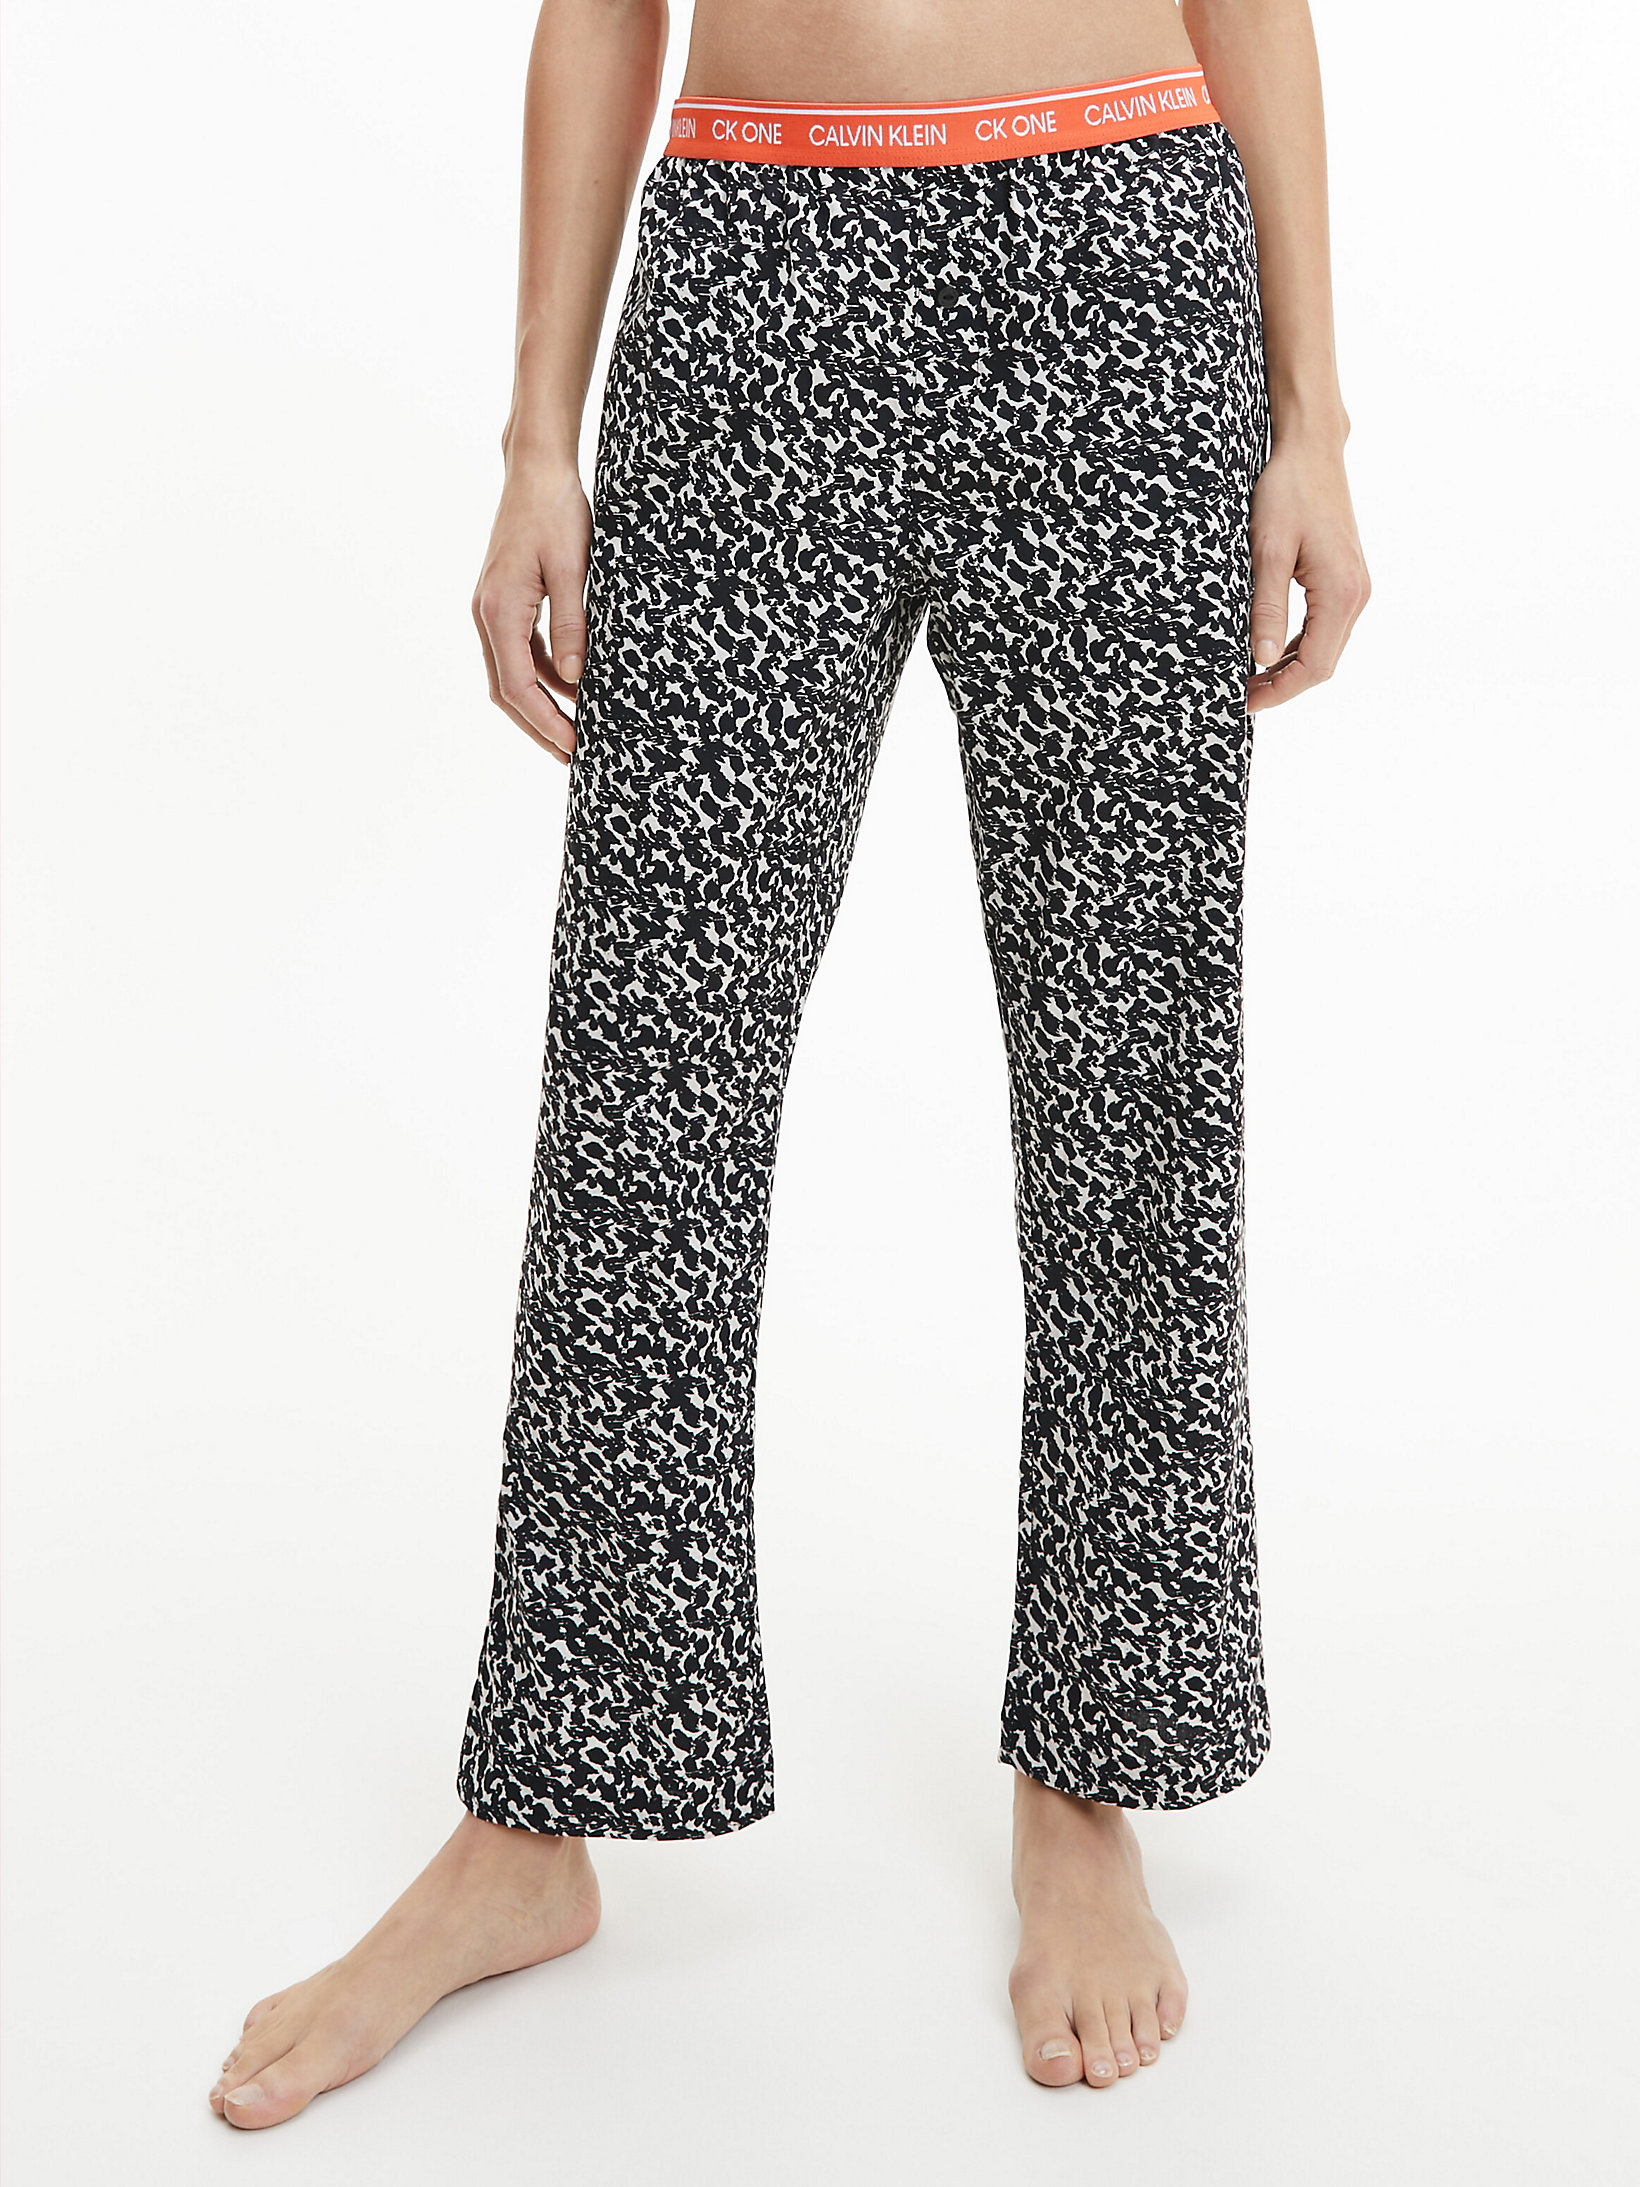 Distorted Animal - Oatmeal Heather Pyjama Pants - CK One undefined women Calvin Klein